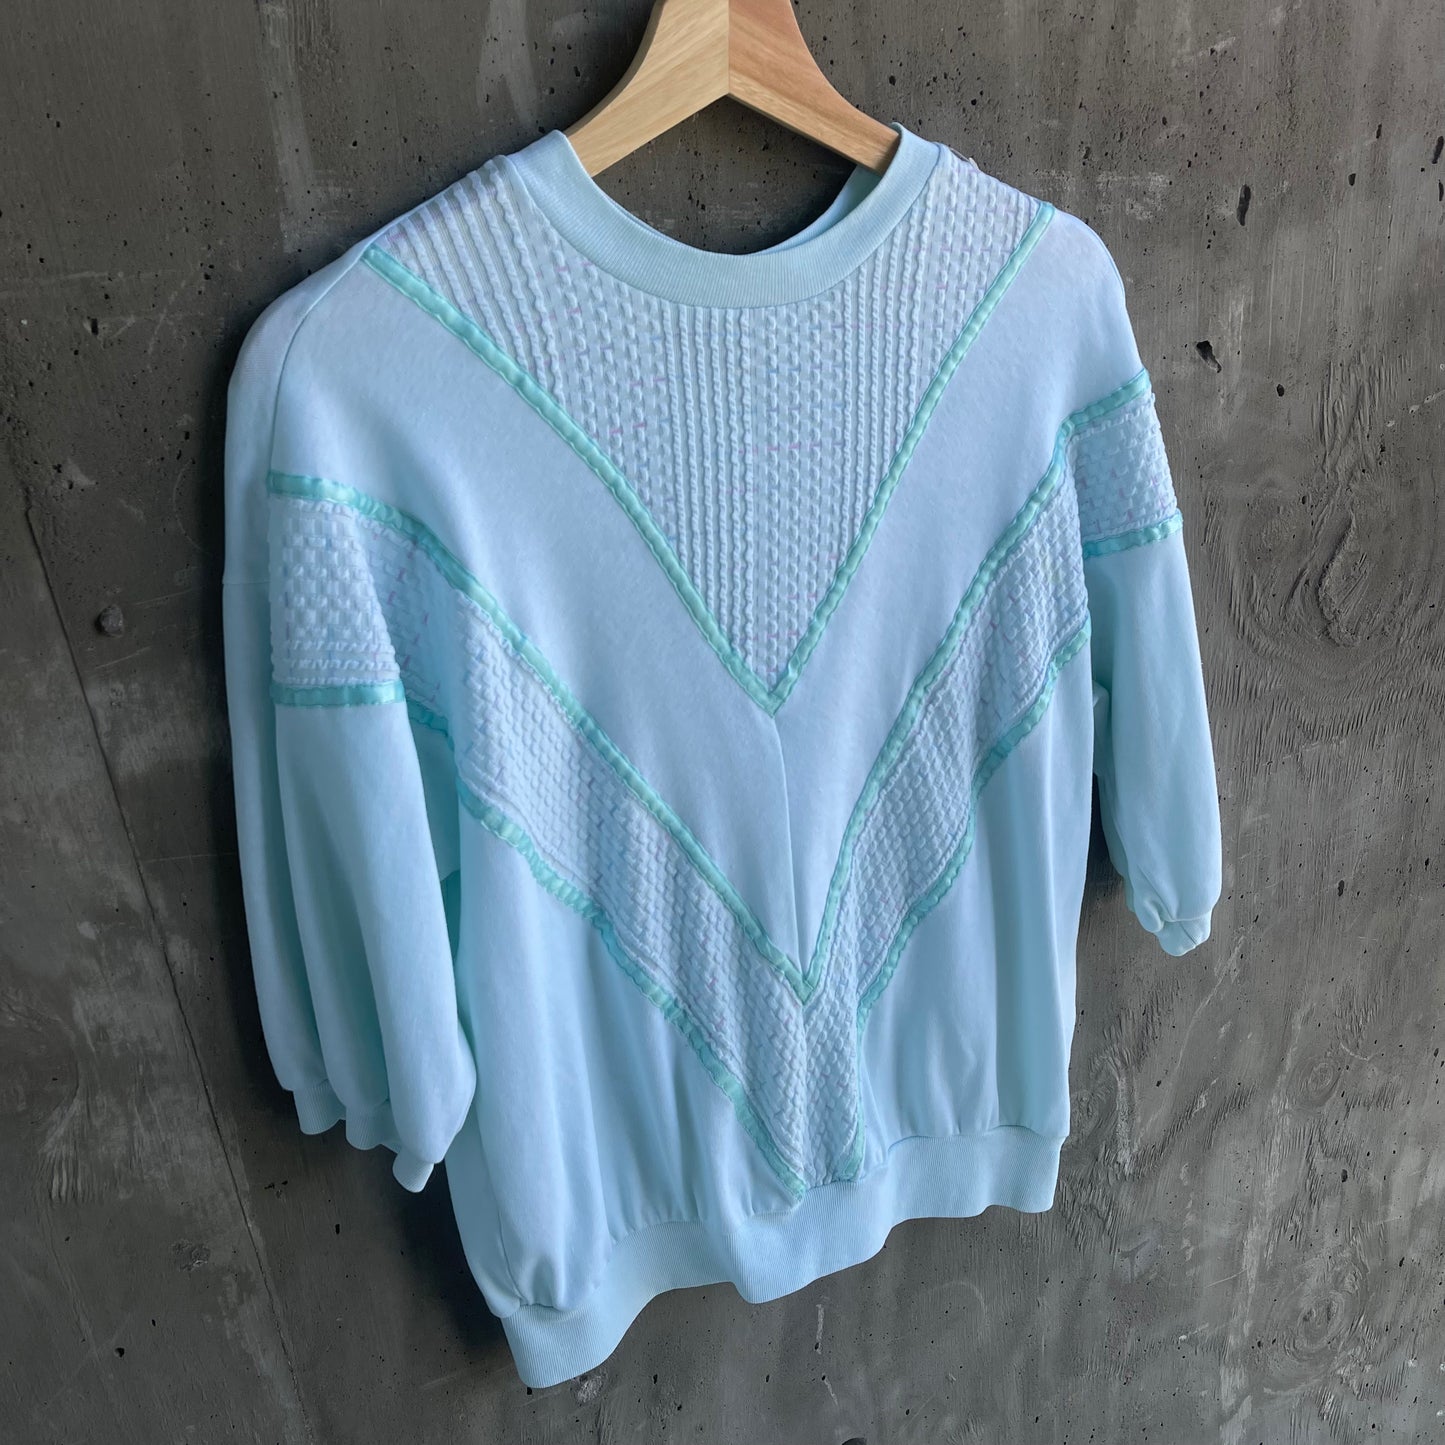 Vintage 80’s 90’s Rockabilly Knit Sweater Tolerance in Teal